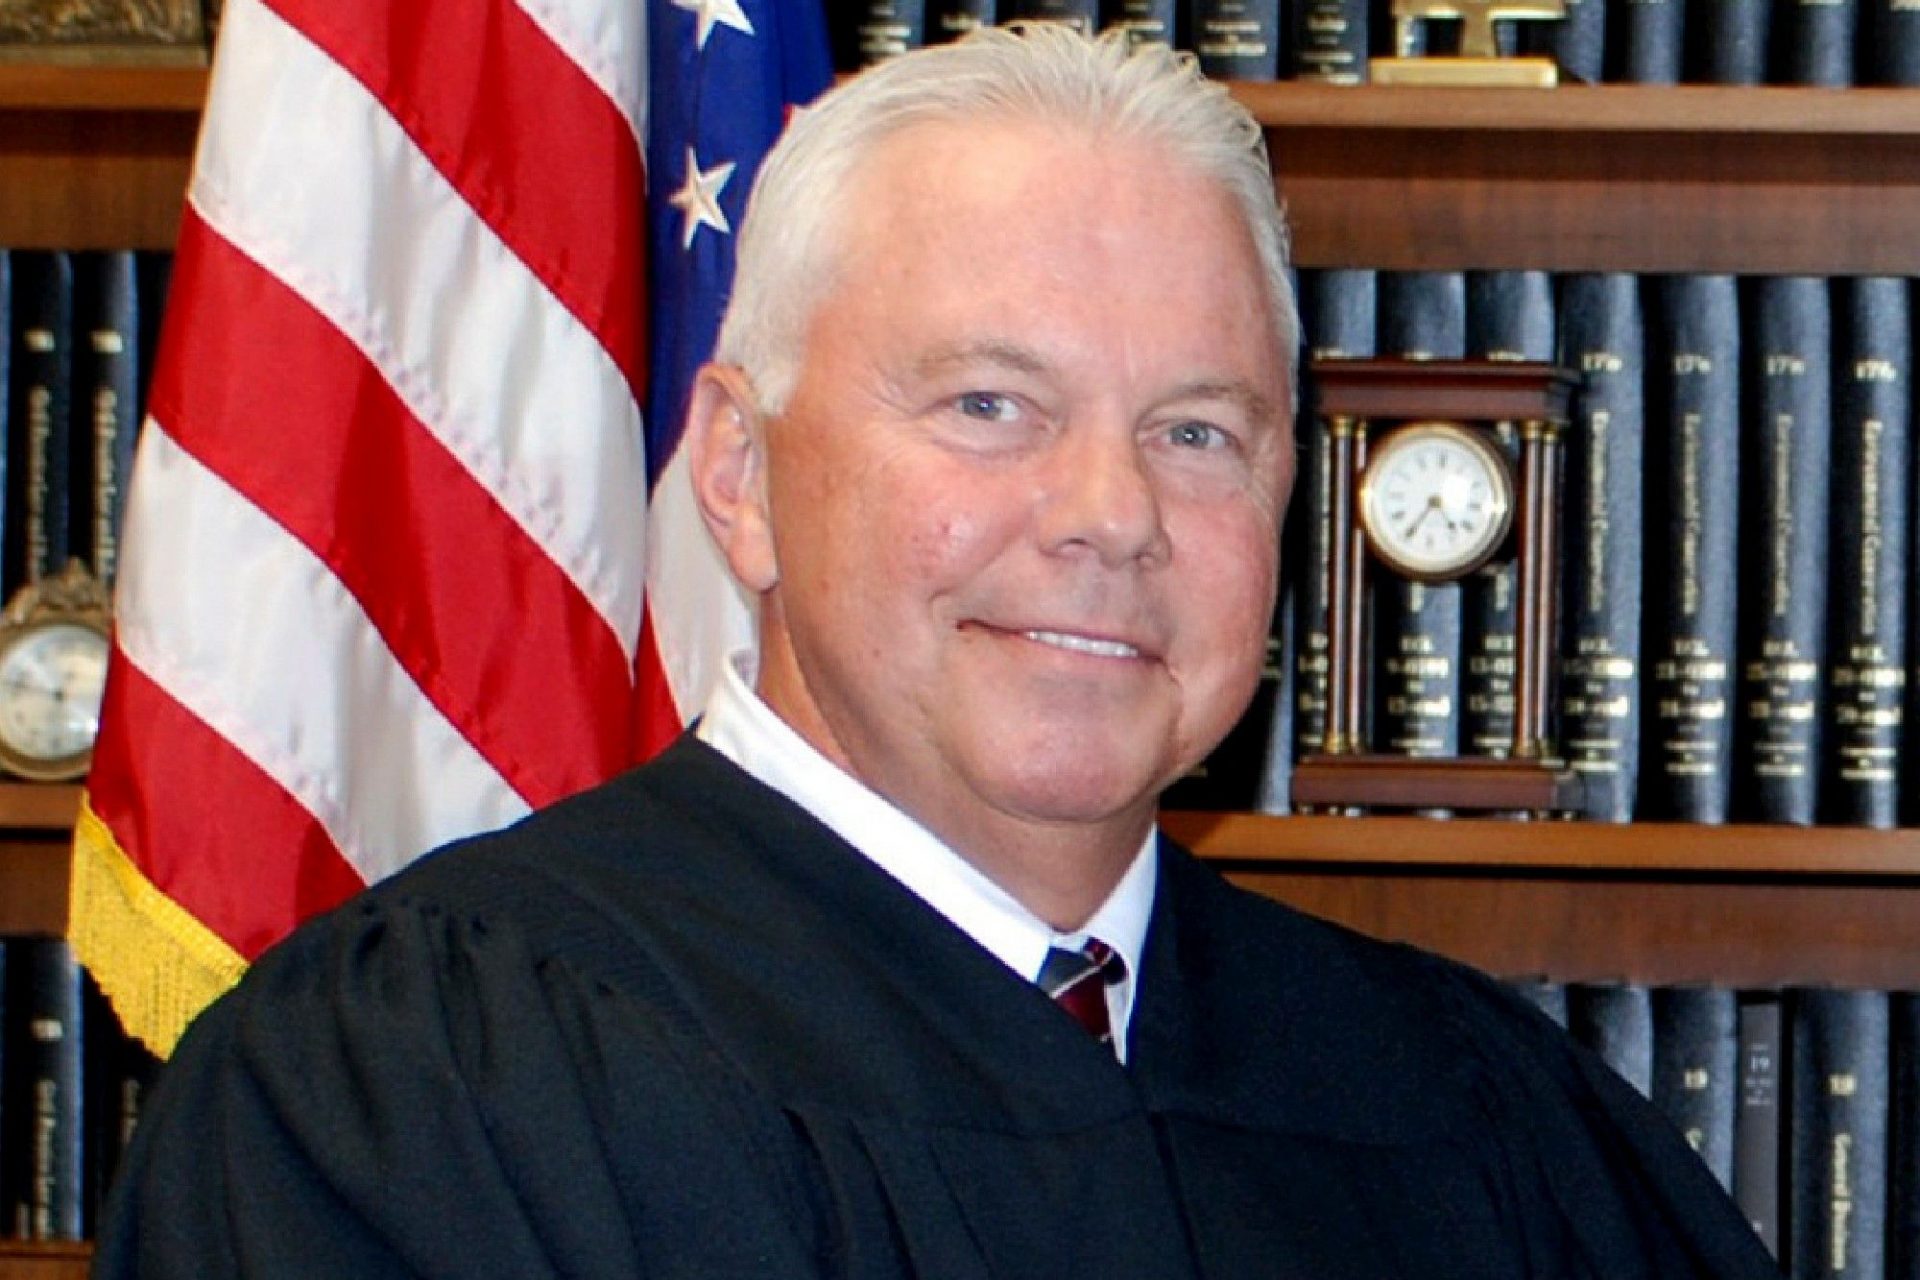 Nassau County District Judge David McAndrews